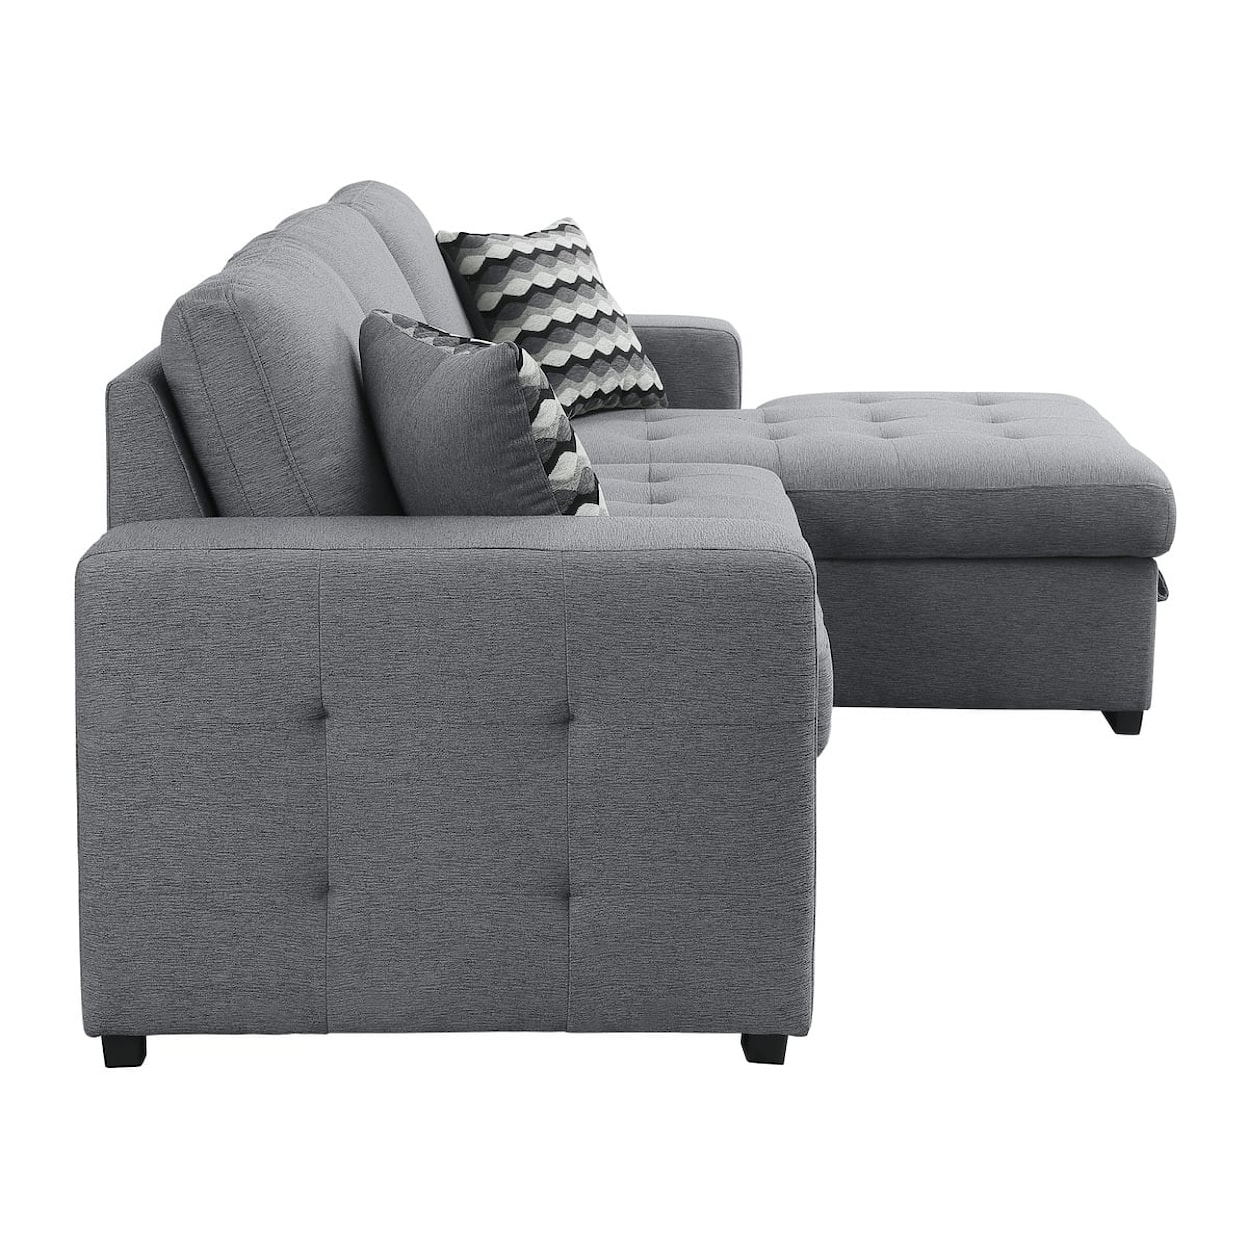 Homelegance Furniture Solomon 2-Piece Sectional Sofa